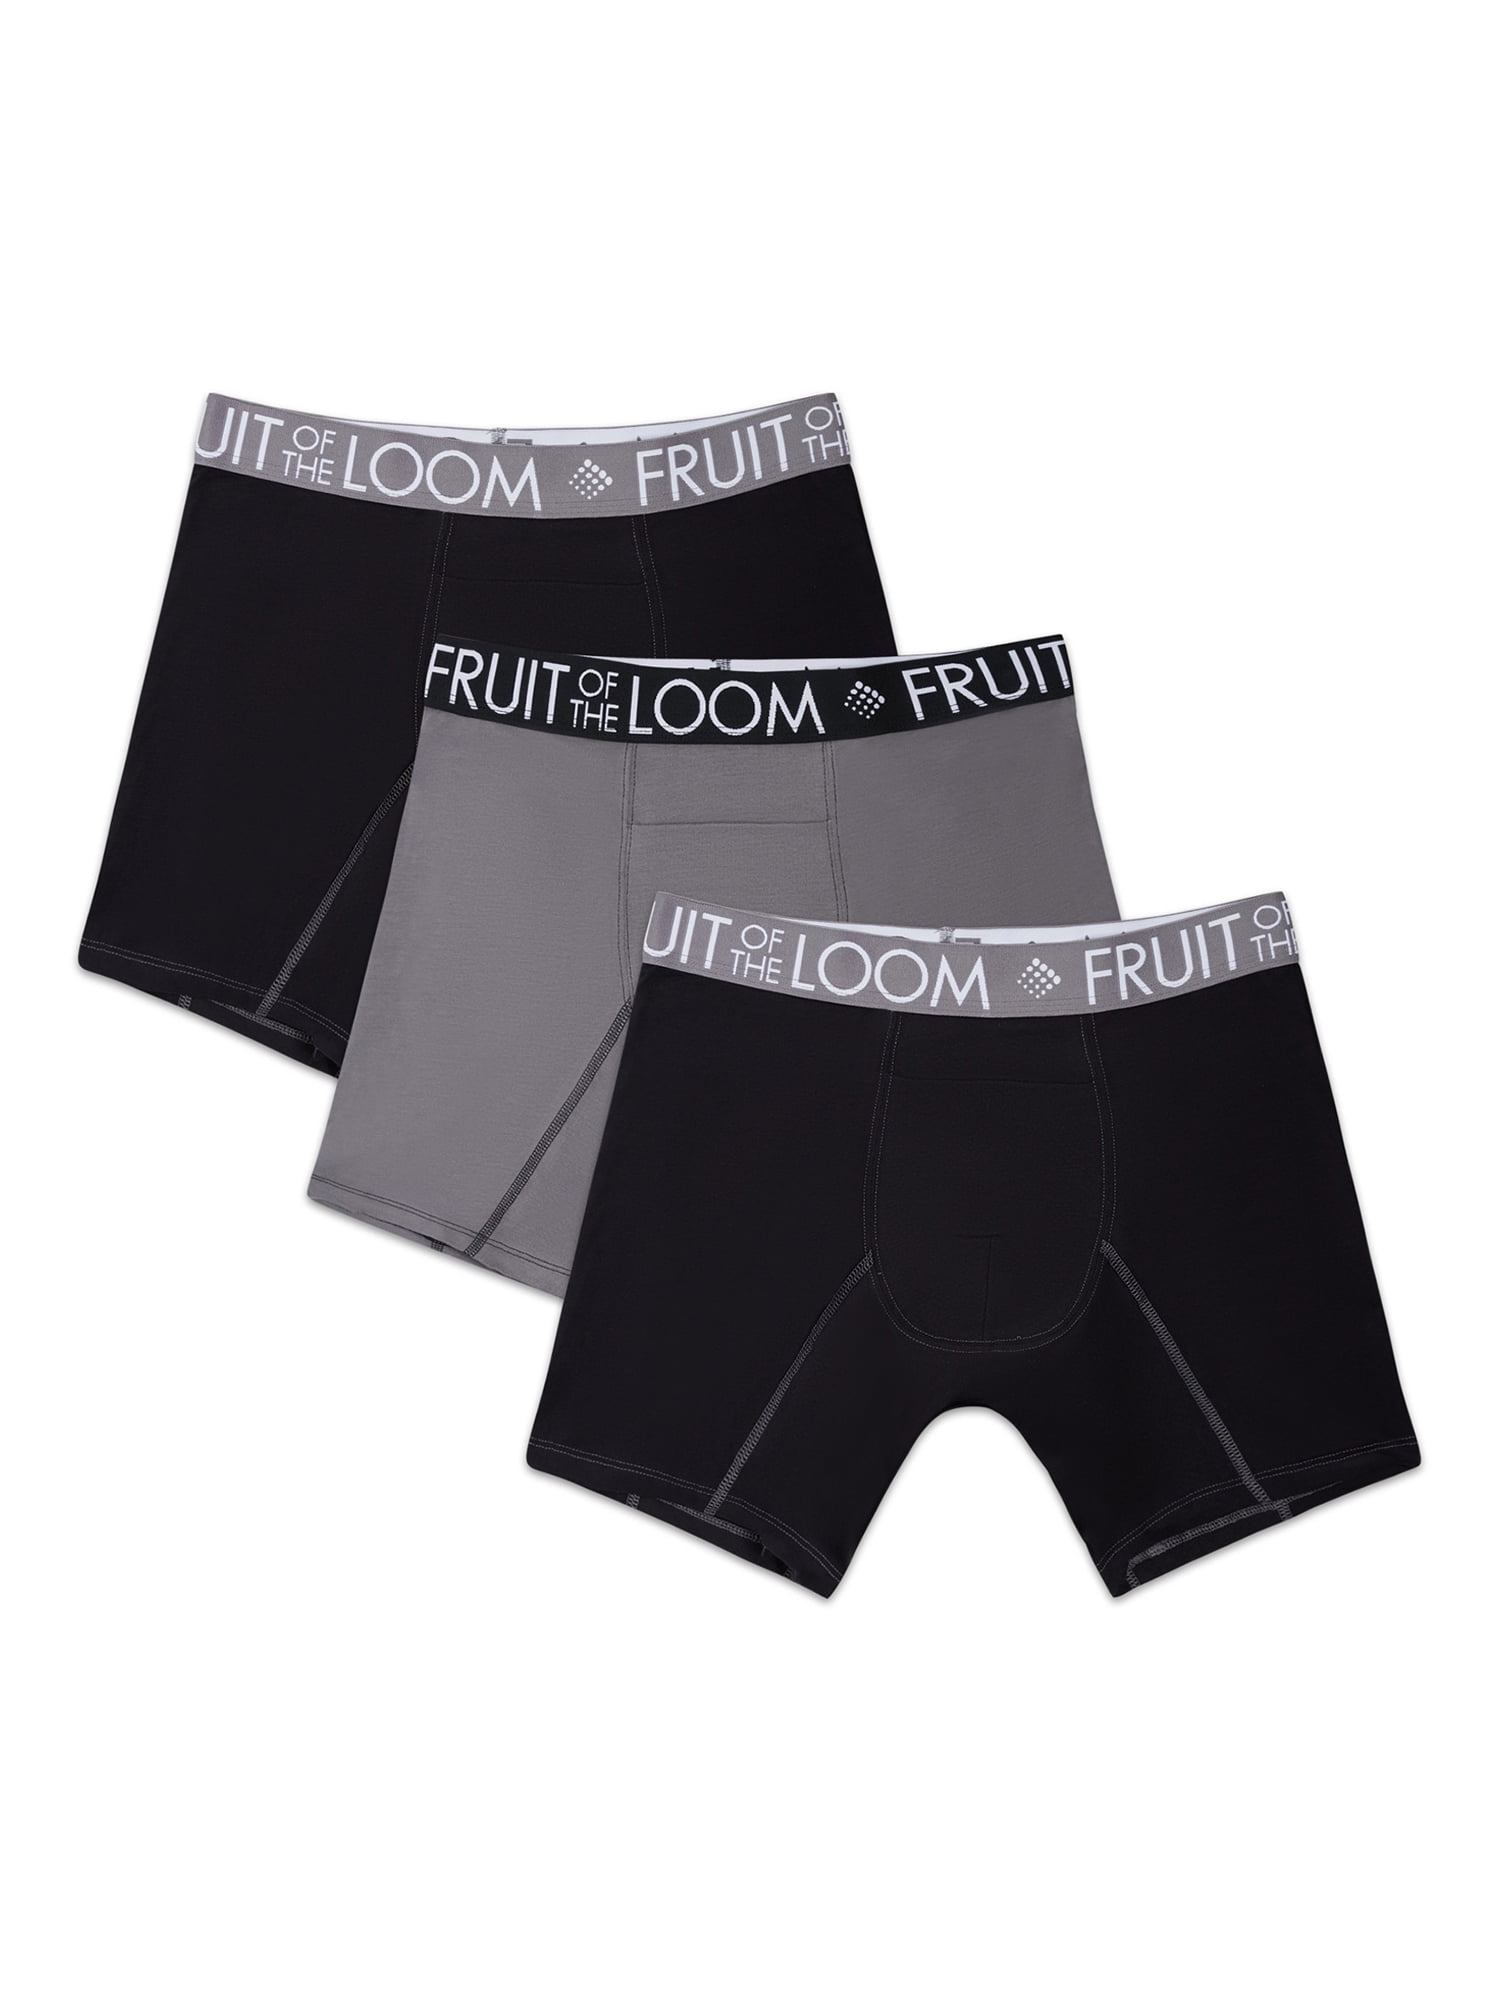 Fruit of the Loom Men's Comfort Supreme Boxer Briefs - (Black, X